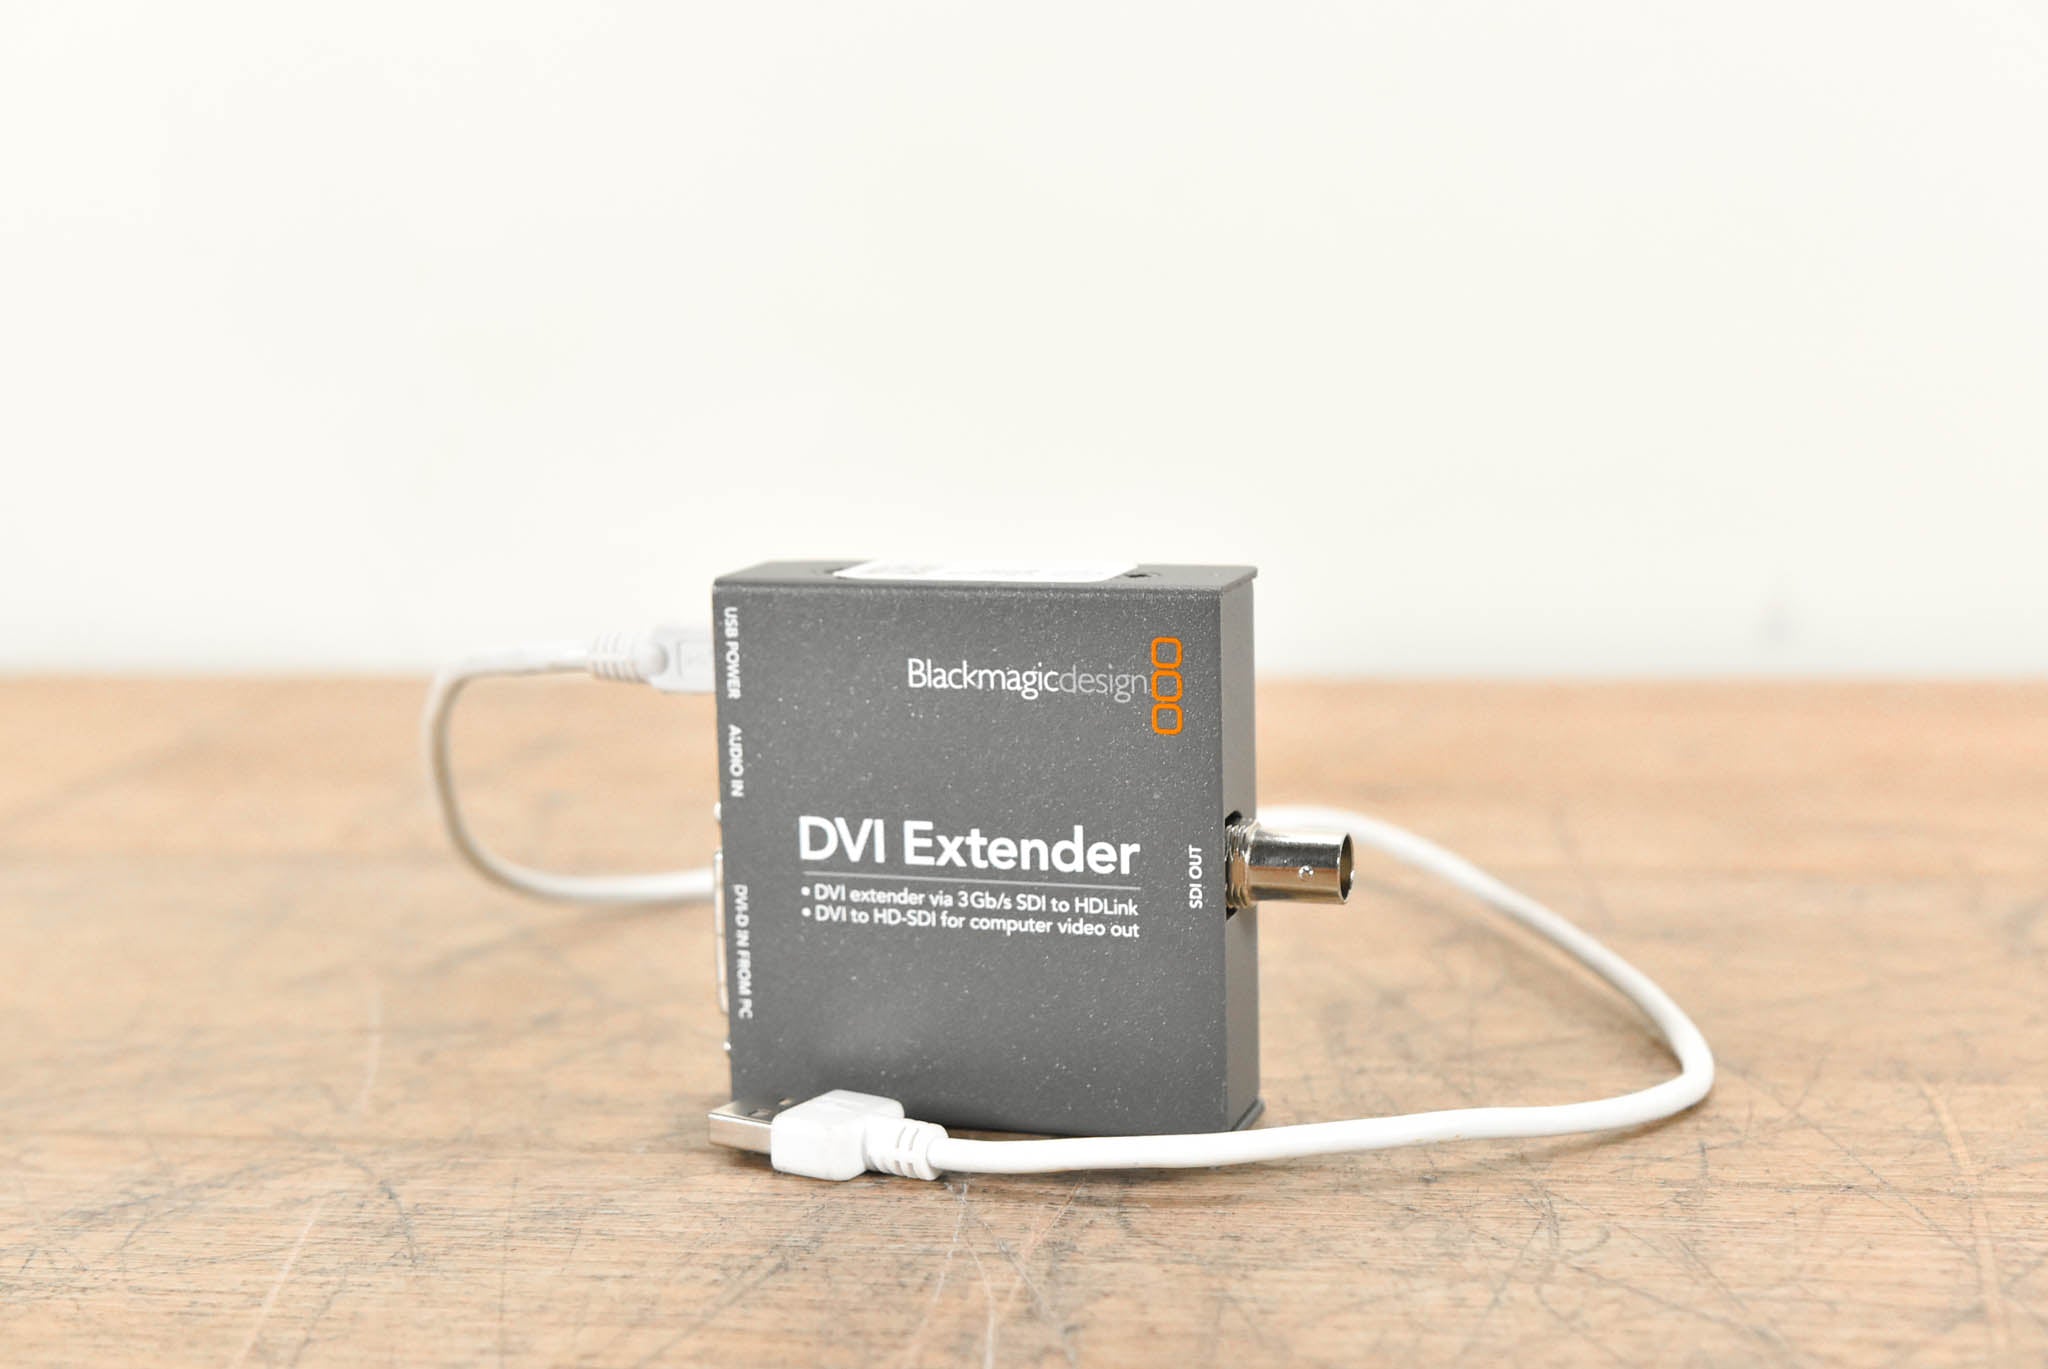 Blackmagic Design DVI Extender